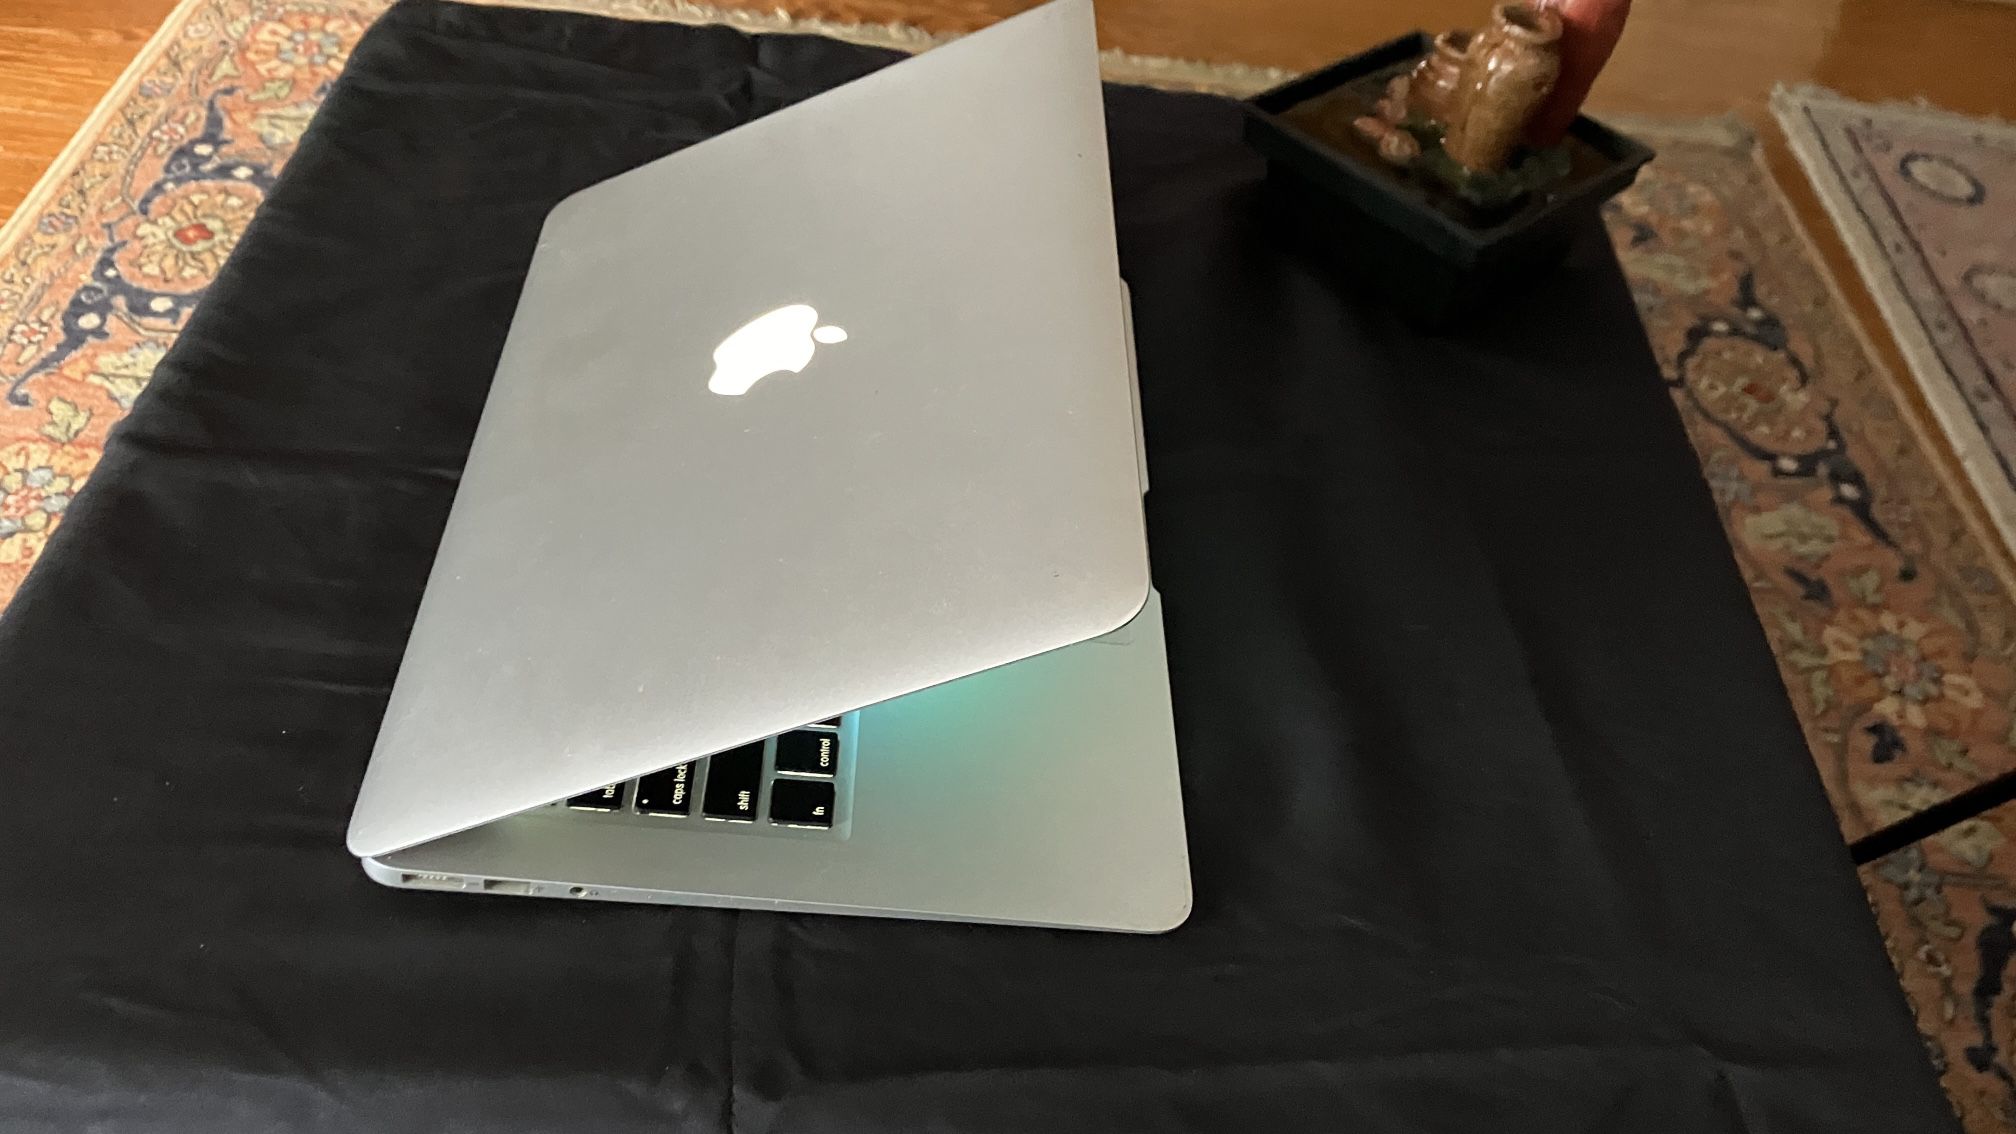 Apple MacBook Air 13” Core I5 4Gb Ram 128)Ssd $175